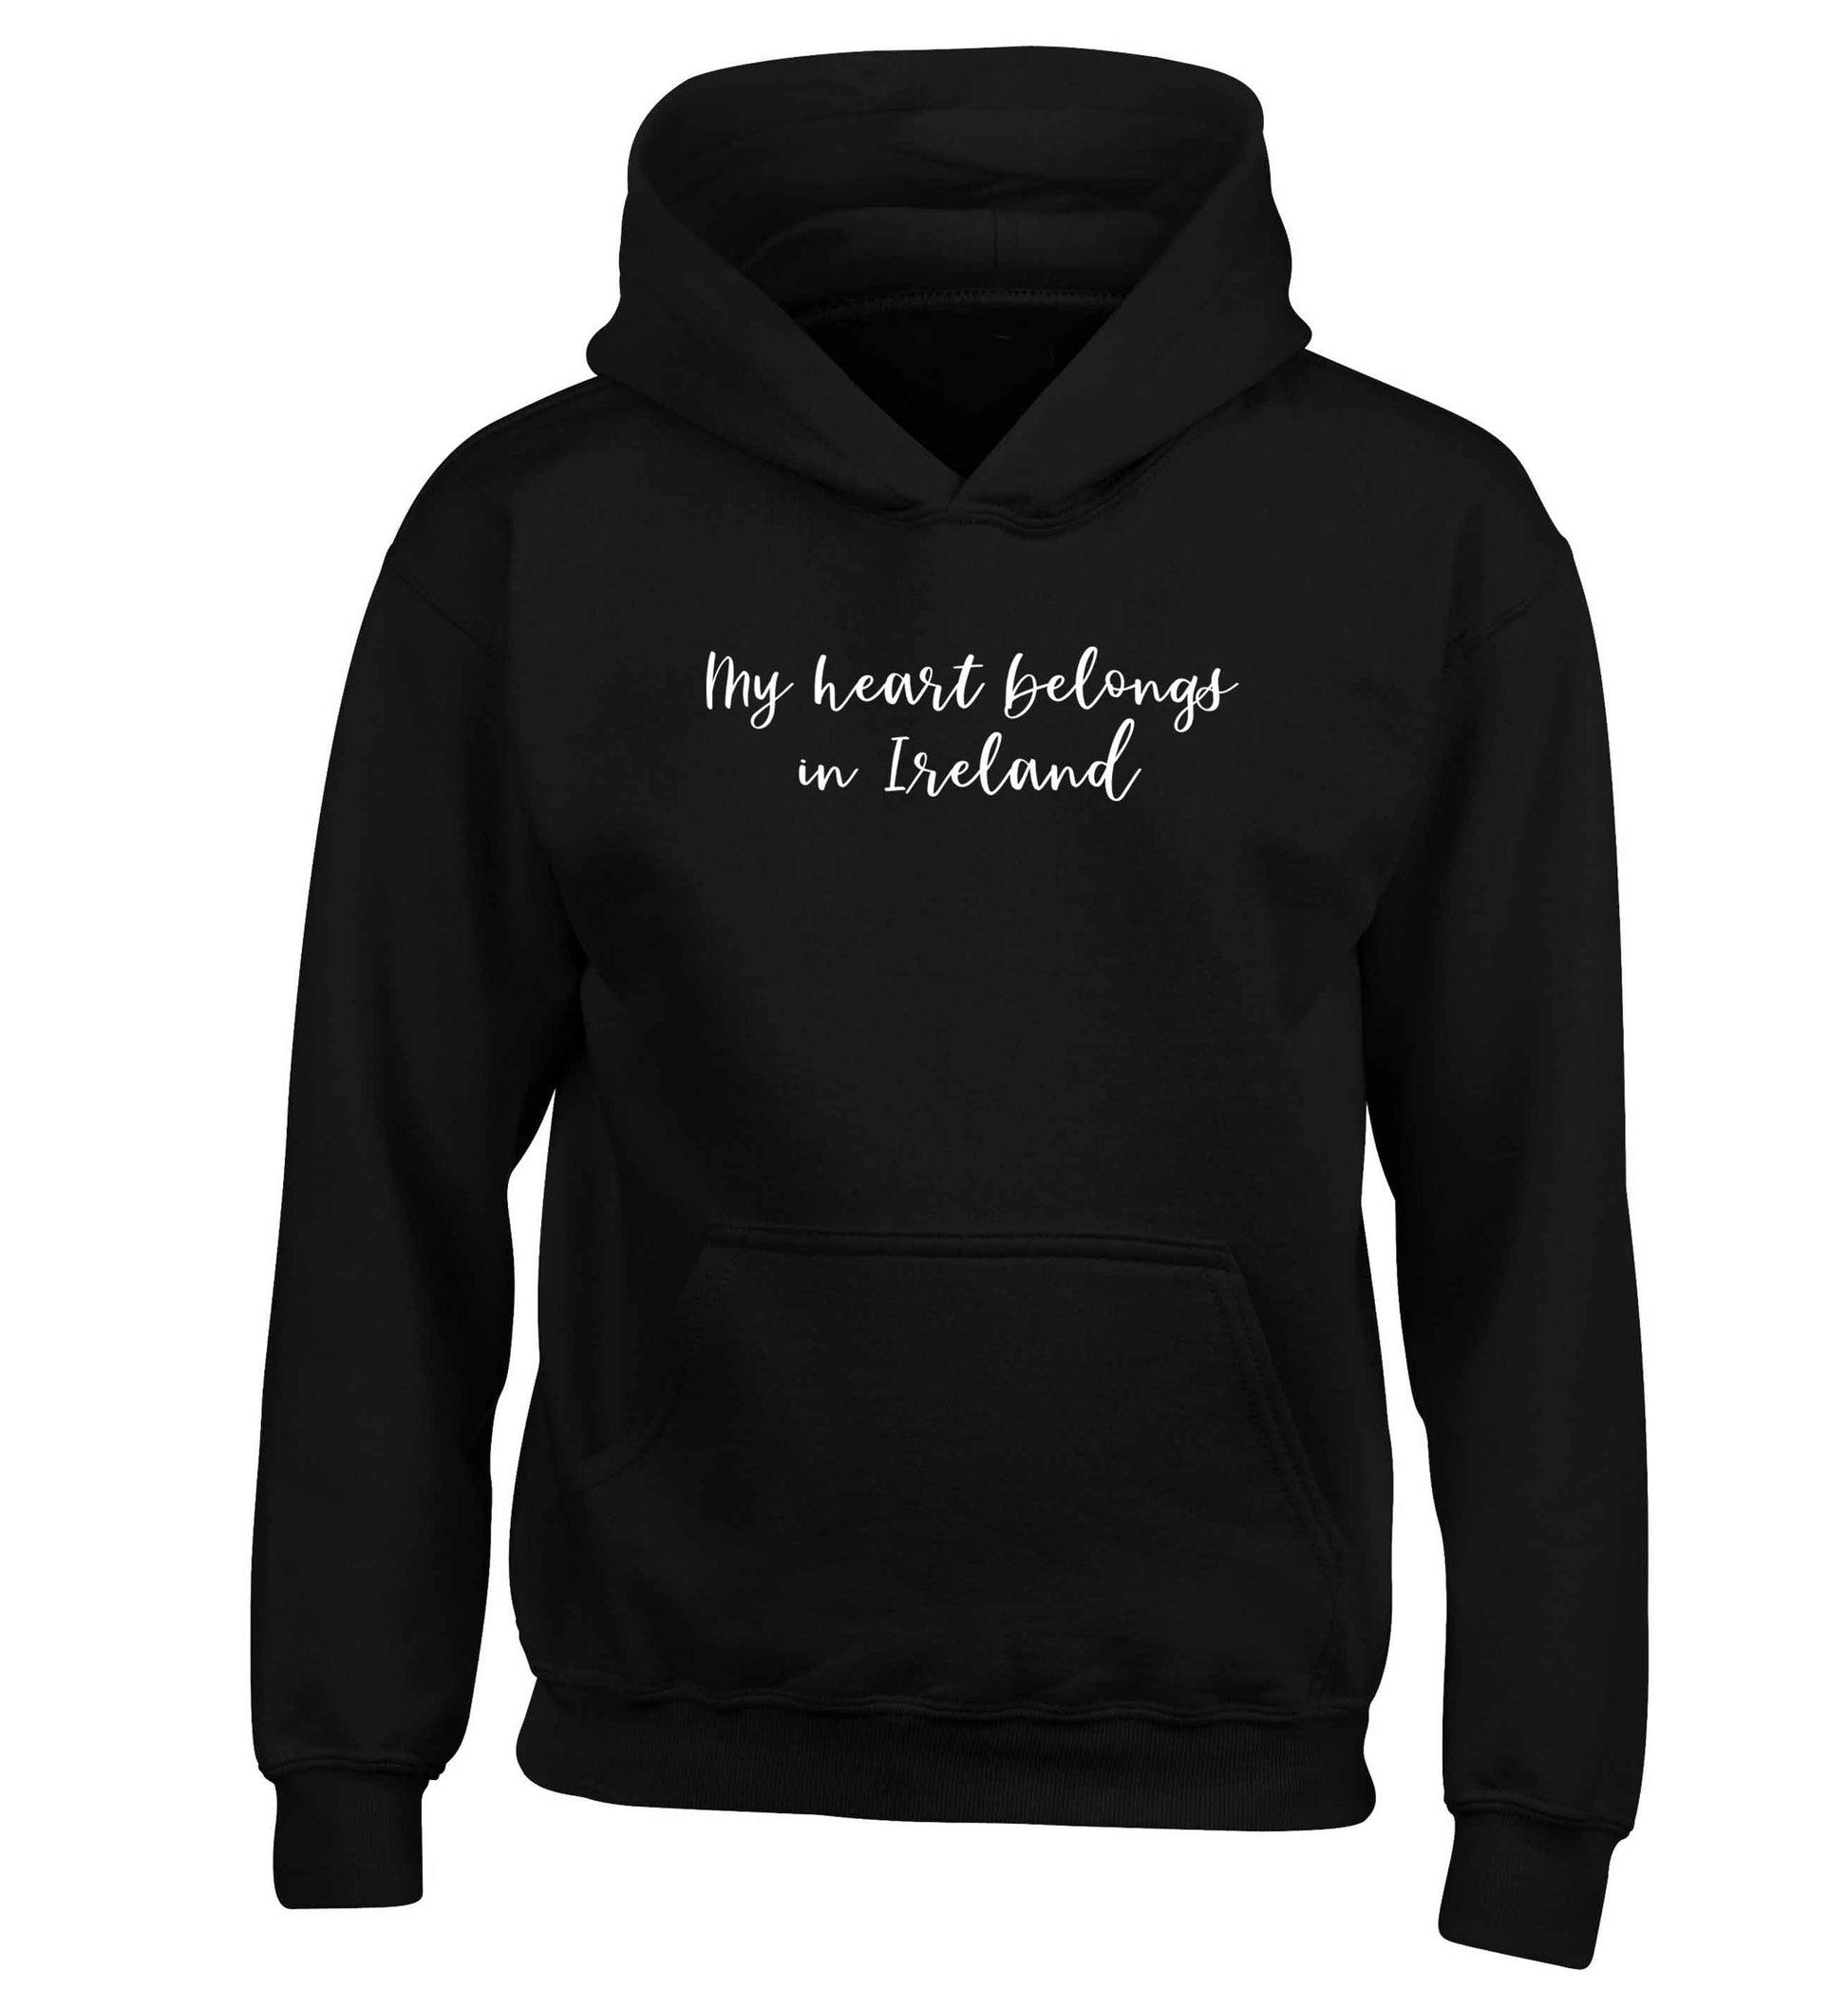 My heart belongs in Ireland children's black hoodie 12-13 Years